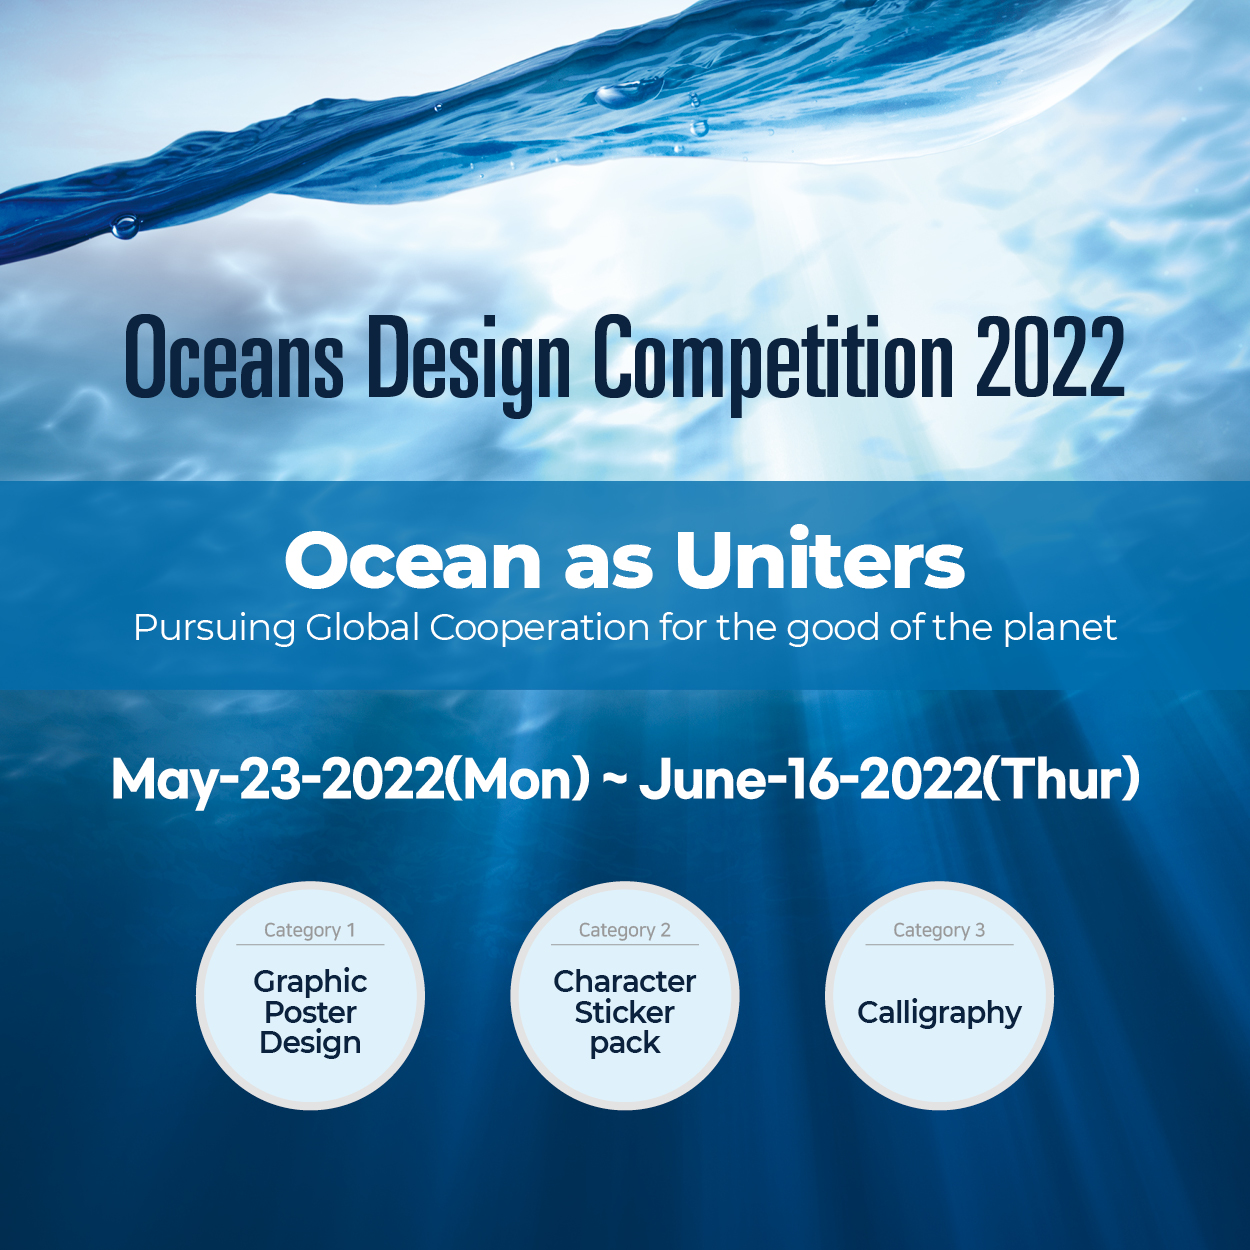 Oceans Design Competition 2022 